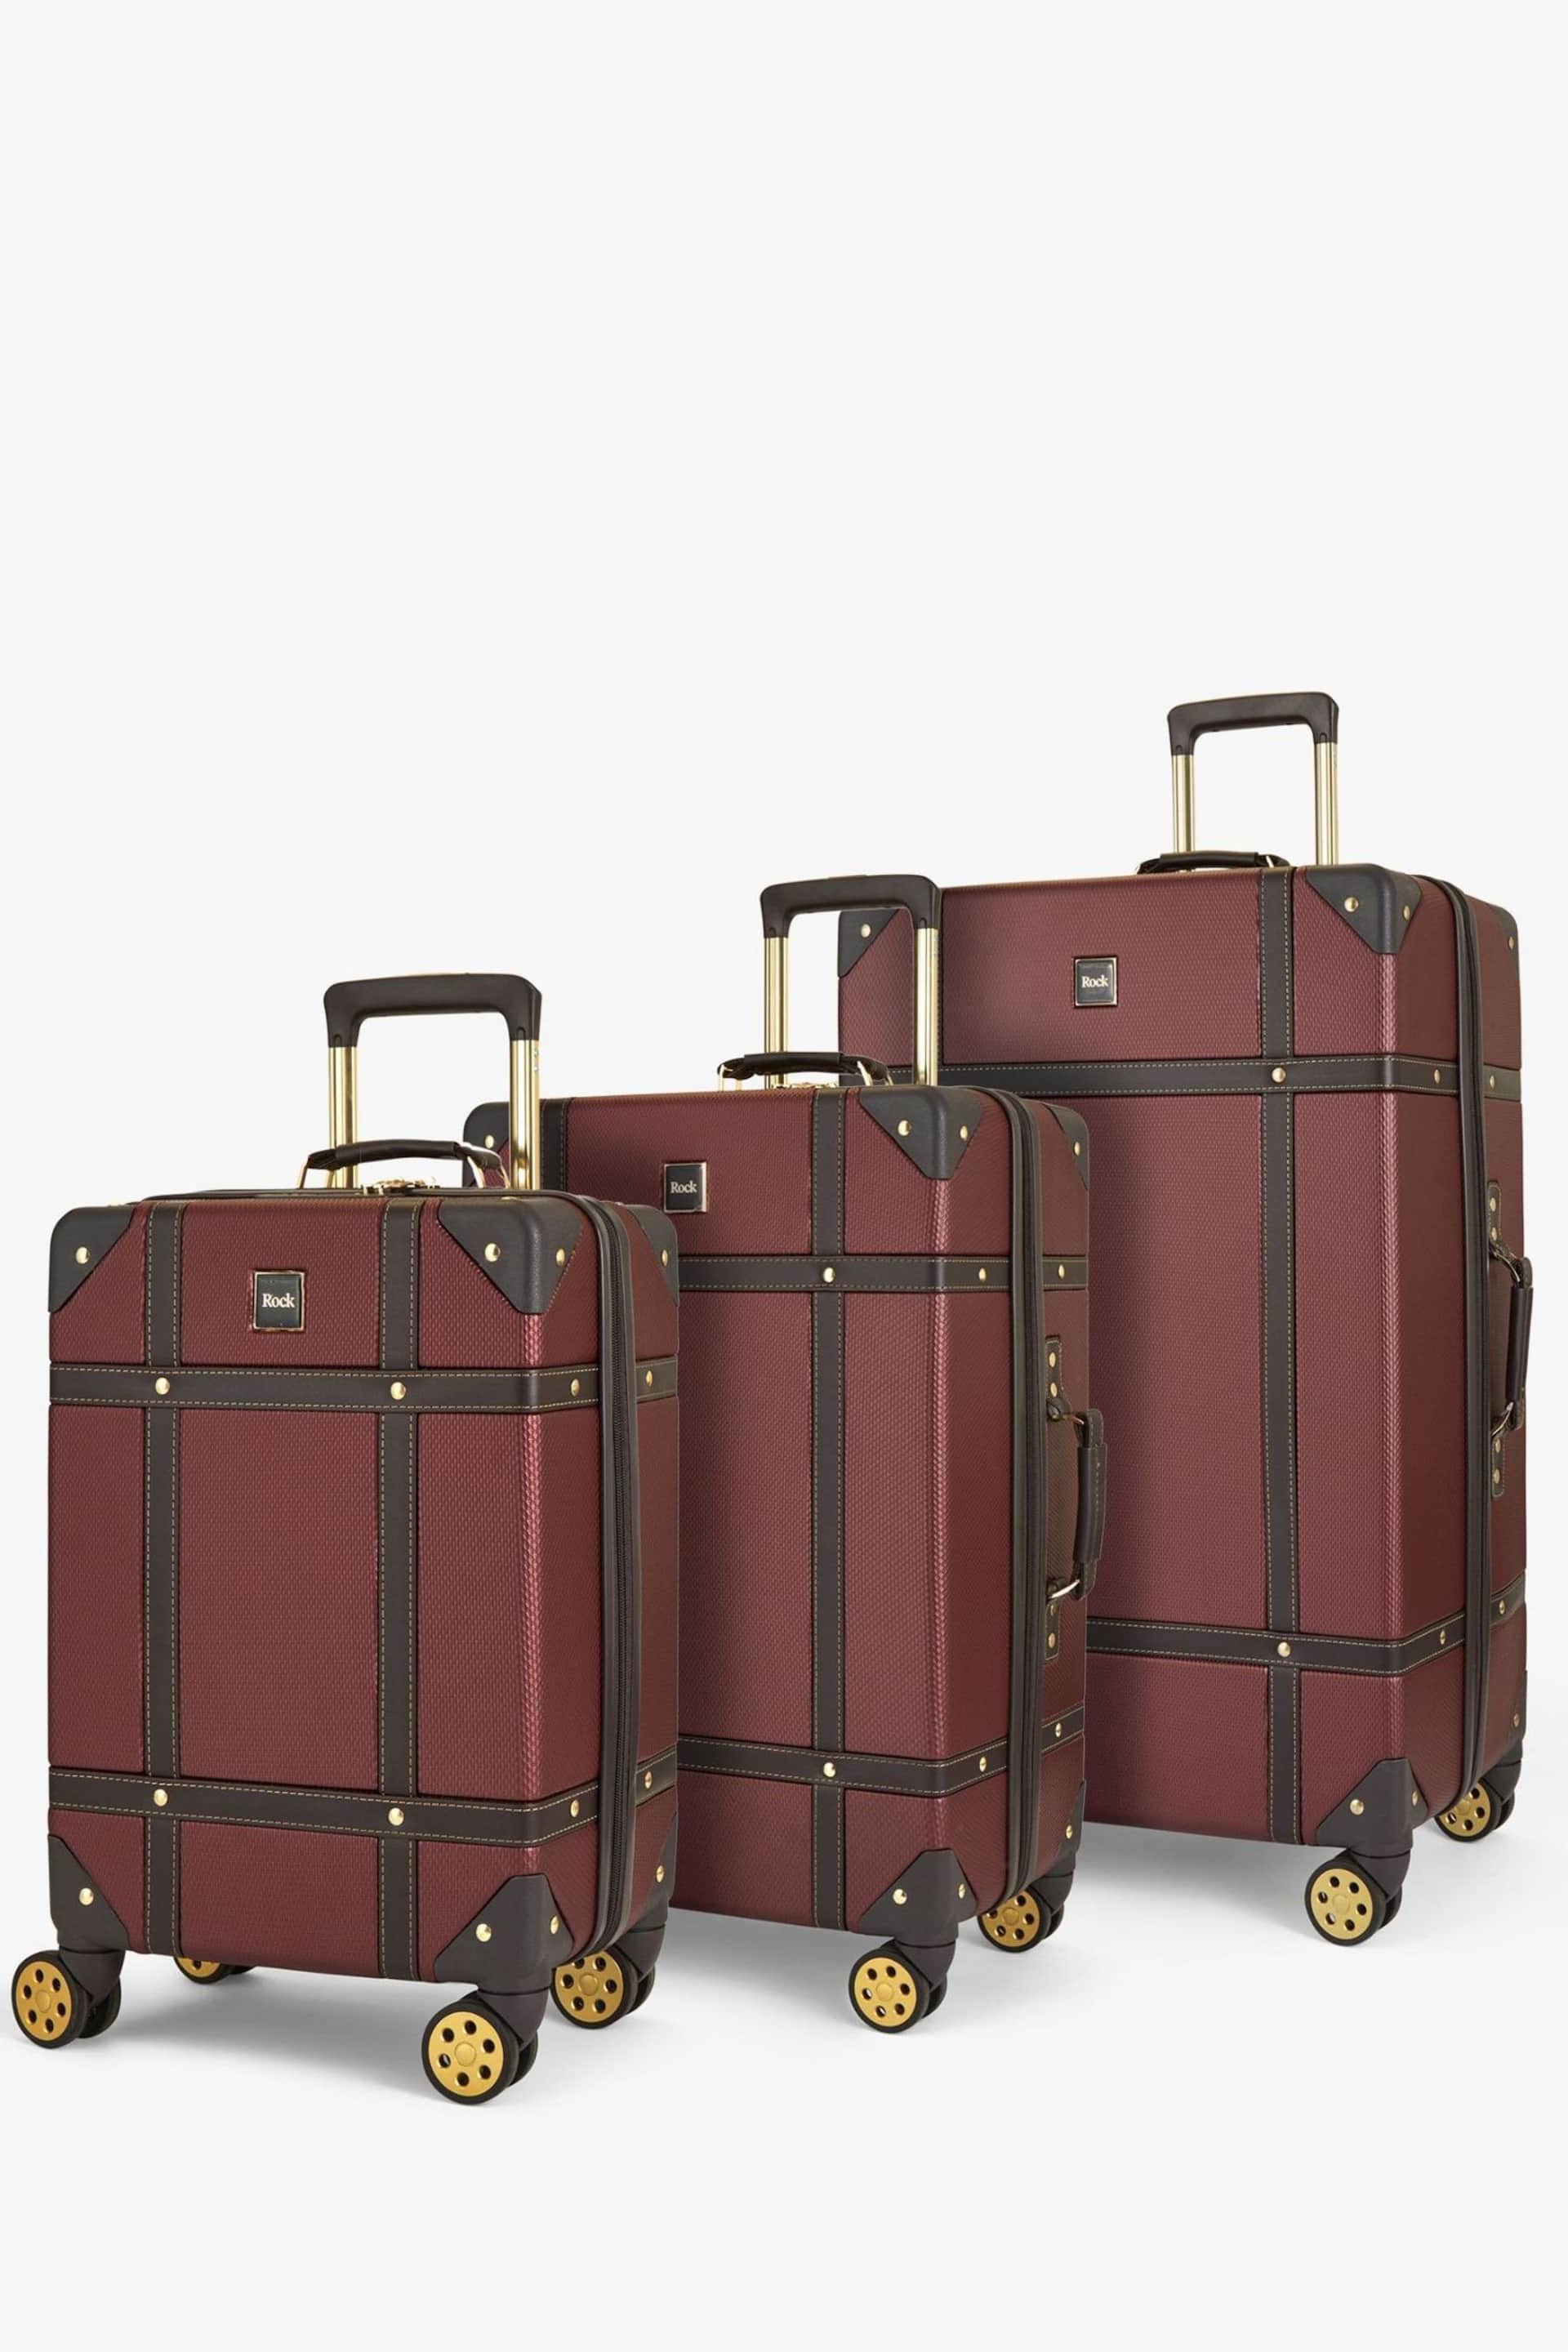 Rock Luggage Vintage Burgundy Set of 3 Suitcases - Image 1 of 3